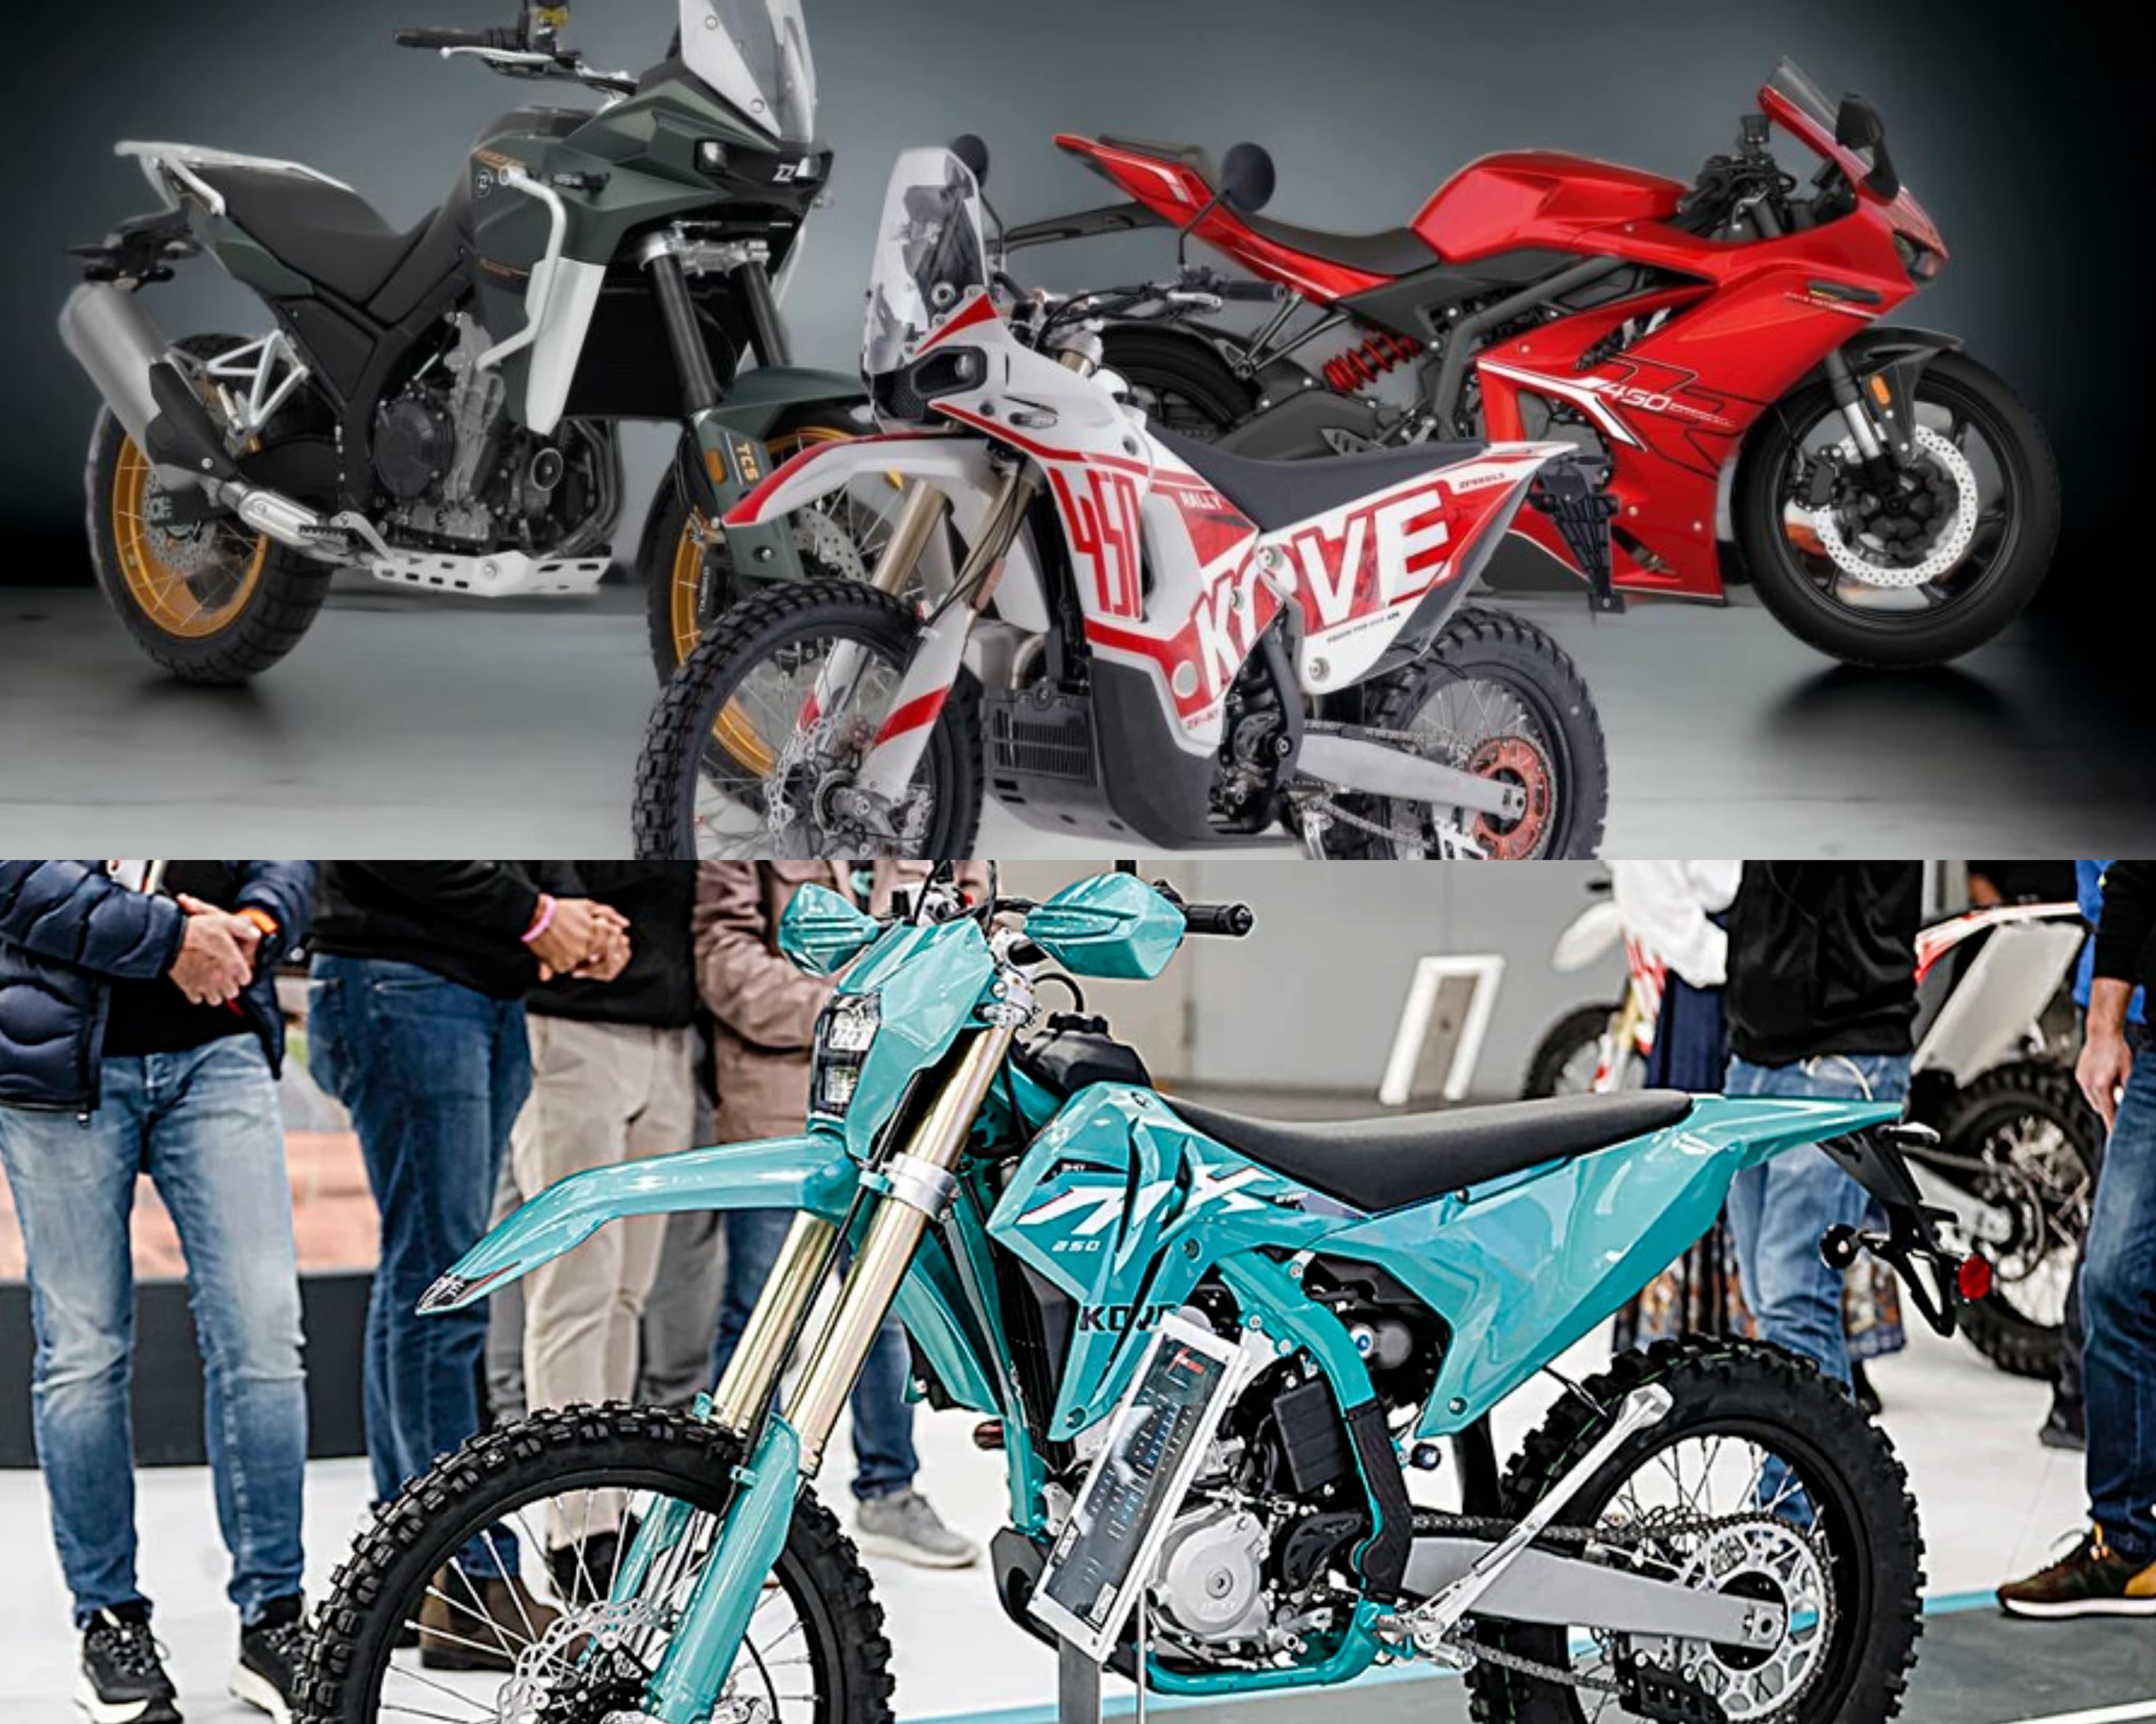 Motor Trail Dengan Kualitas Canggih, Yuk Simak Kelebihan Kove Moto MX250 Disini! 